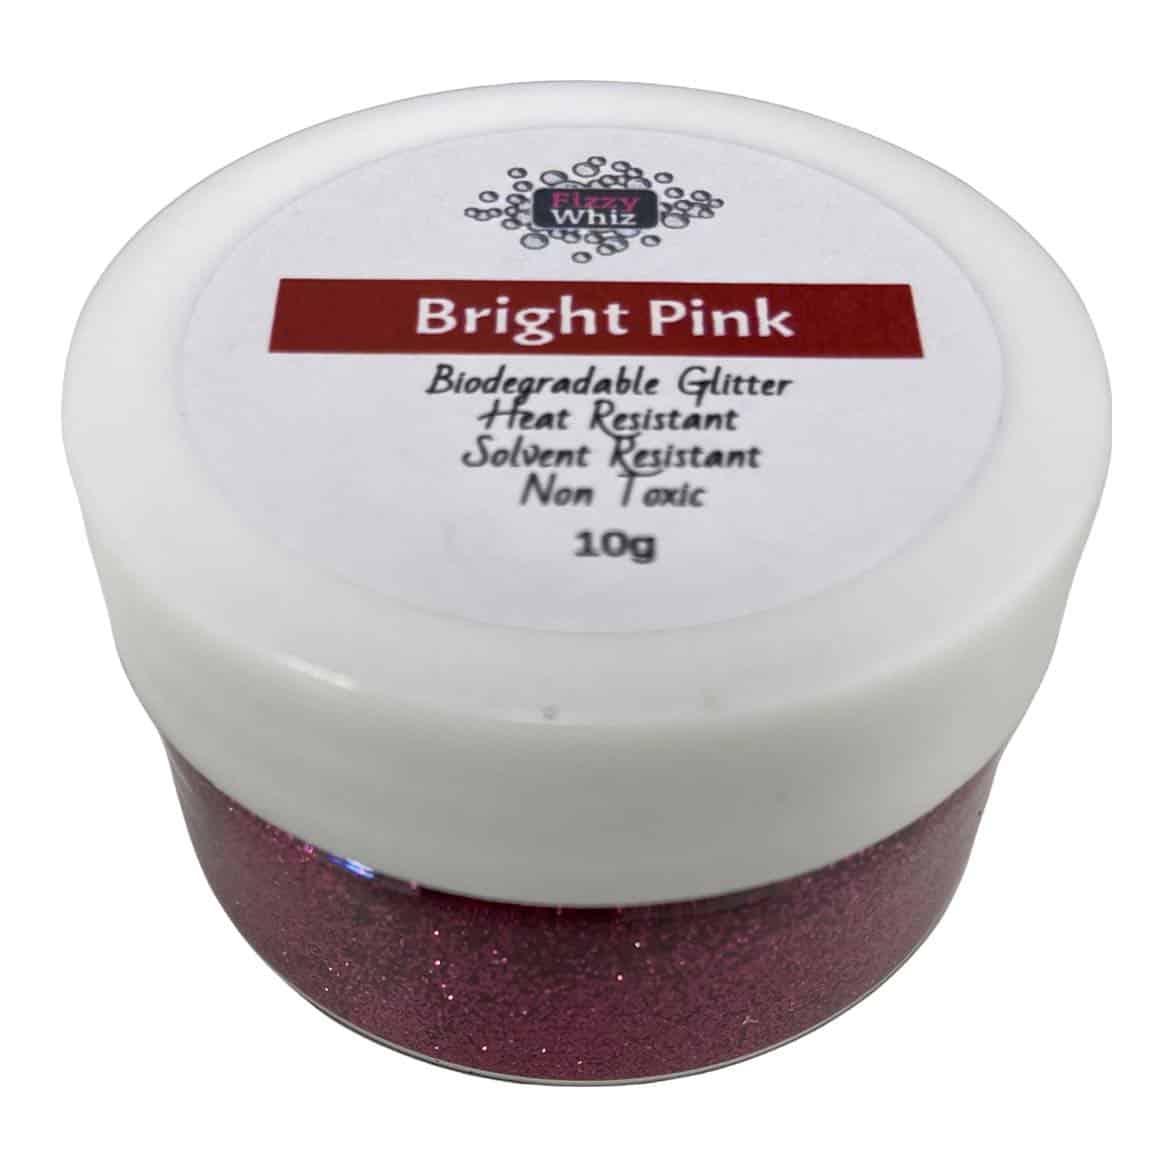 Biodegradable Bright Pink Glitter